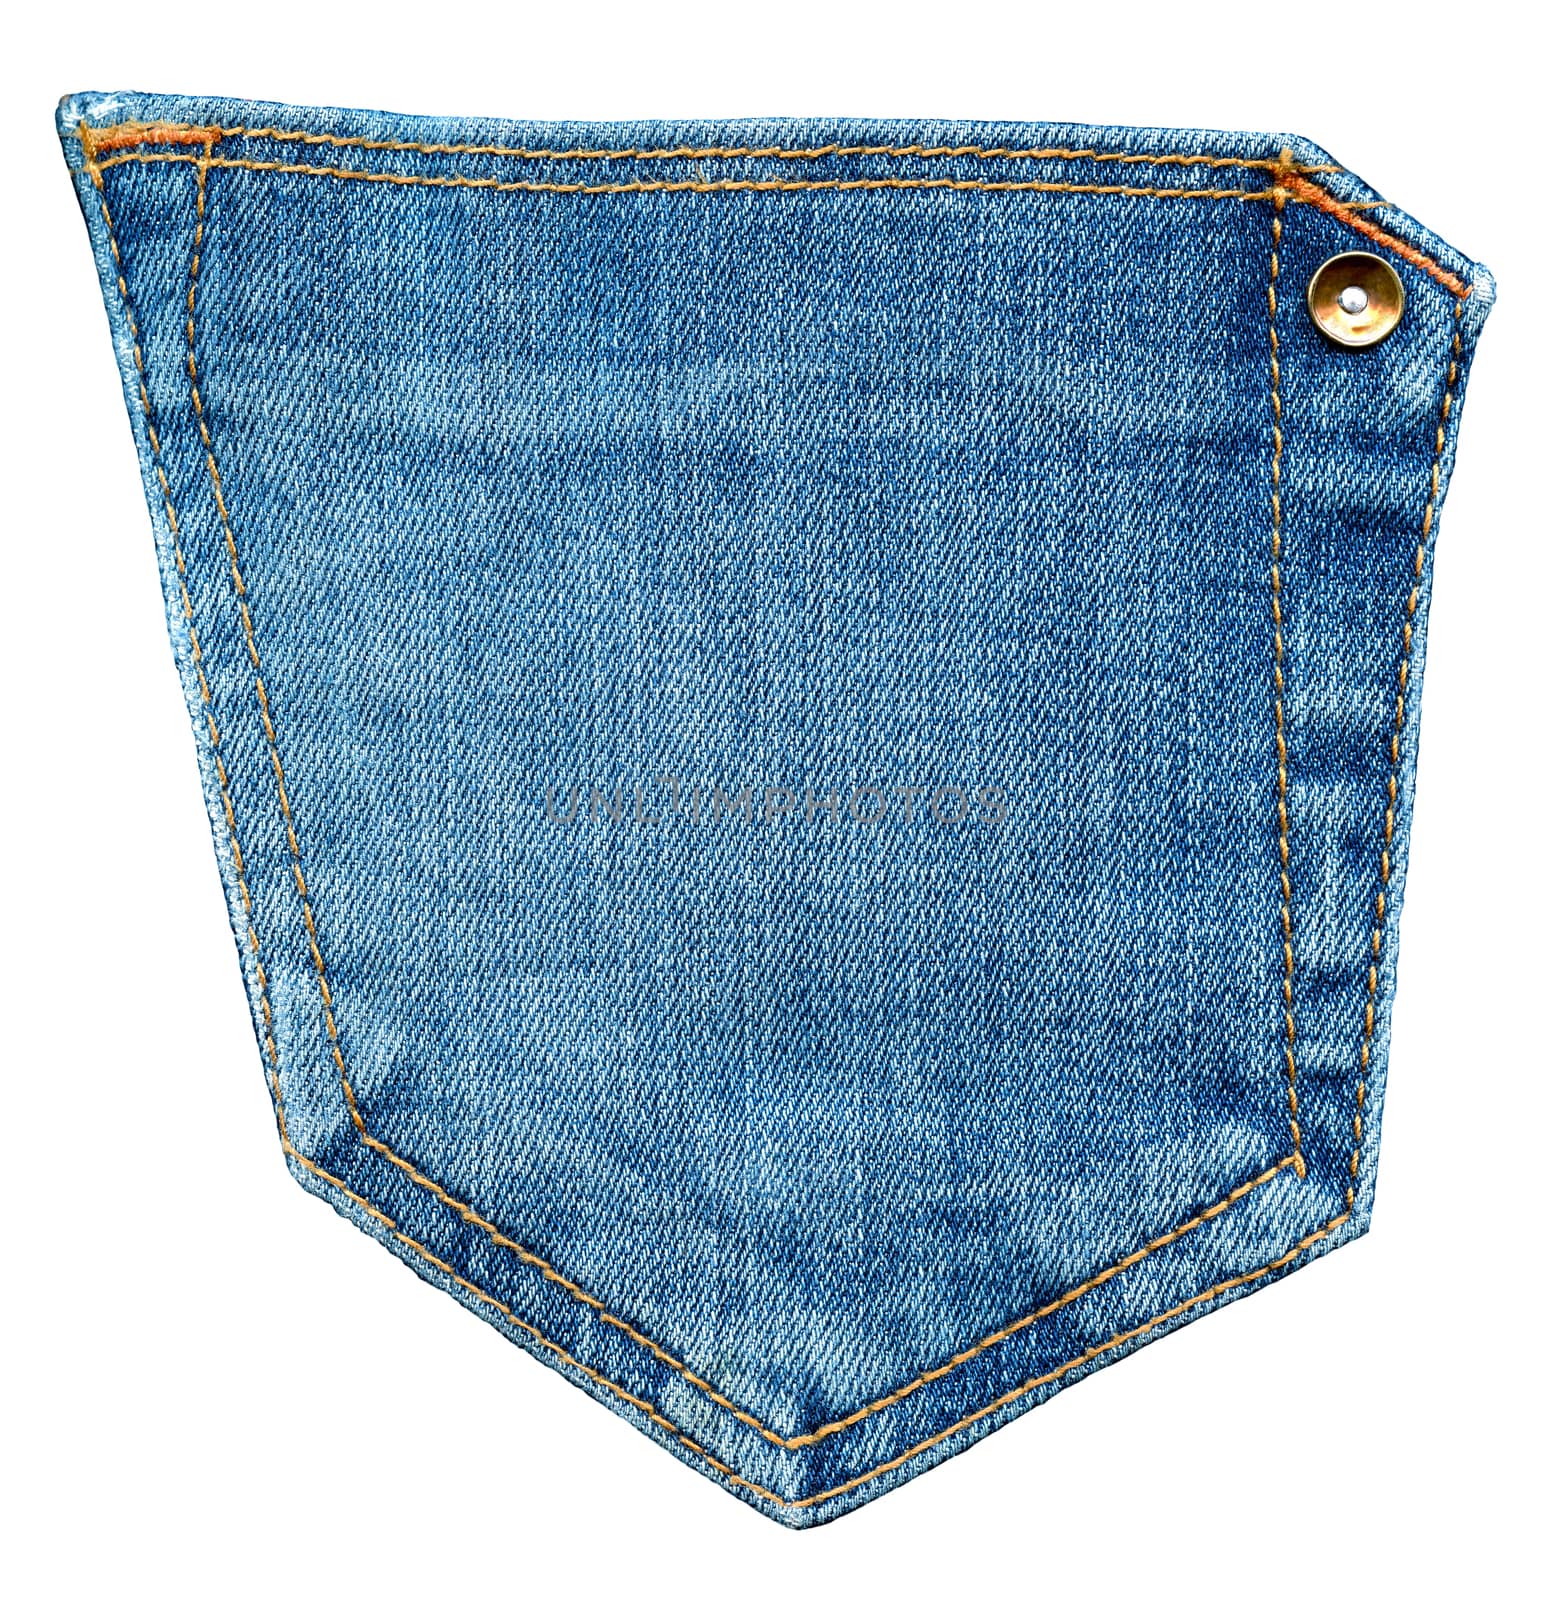 Jeans pocket. Shabby blue denim. by ESSL